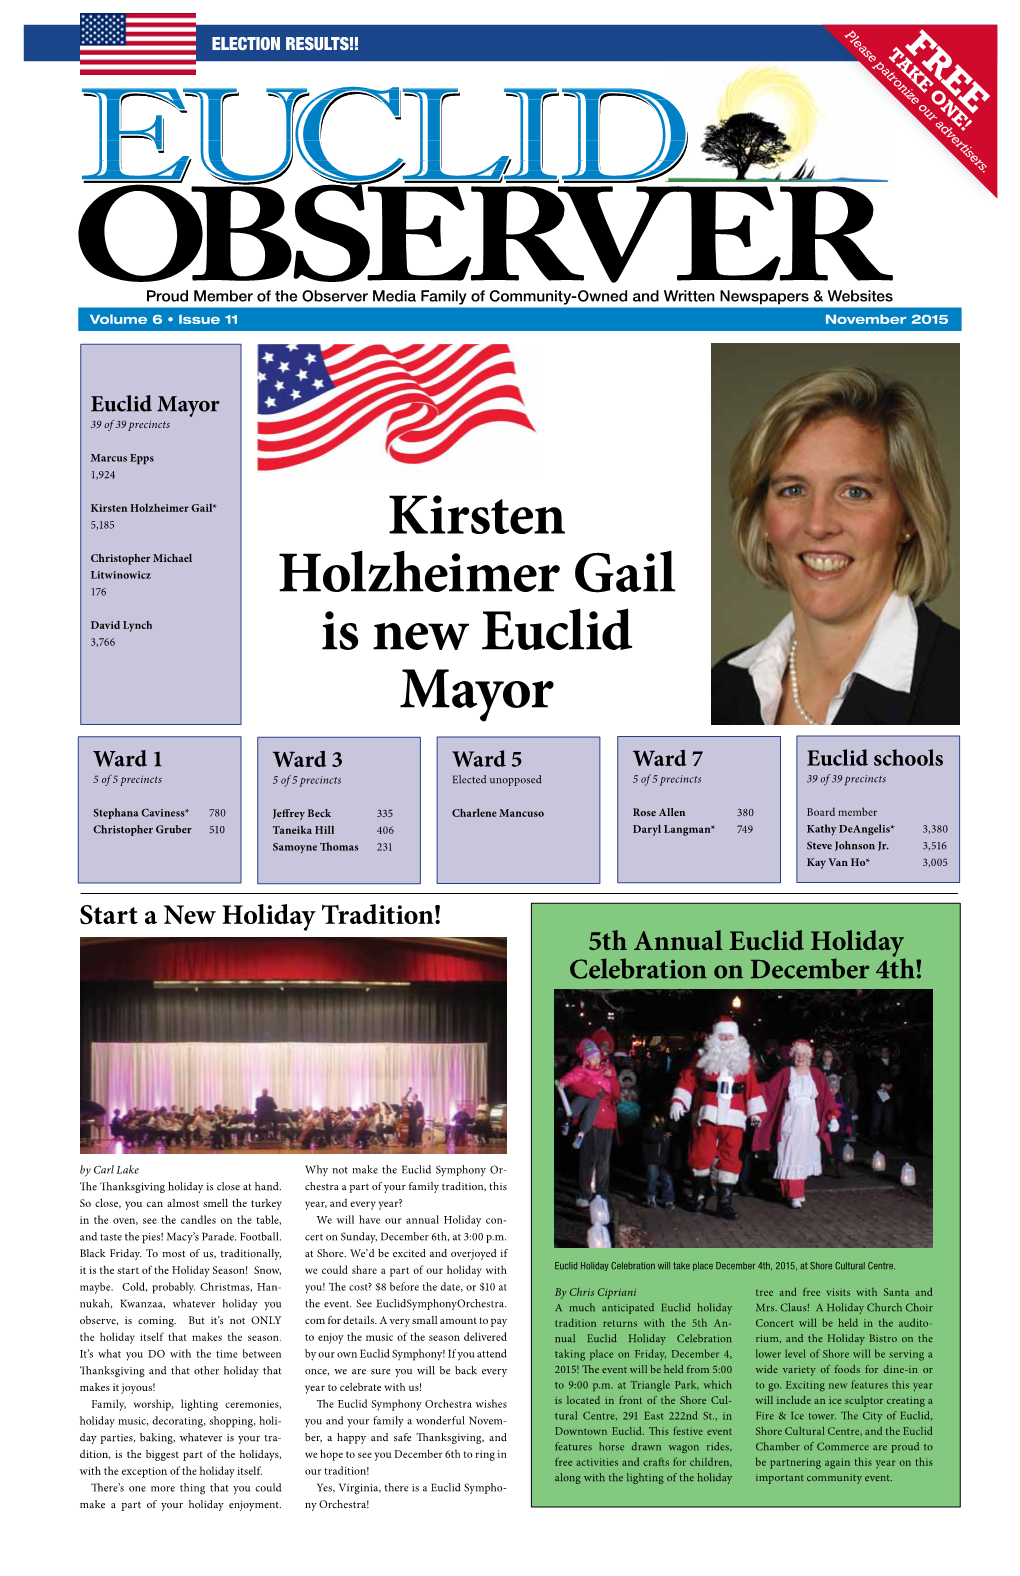 Kirsten Holzheimer Gail Is New Euclid Mayor